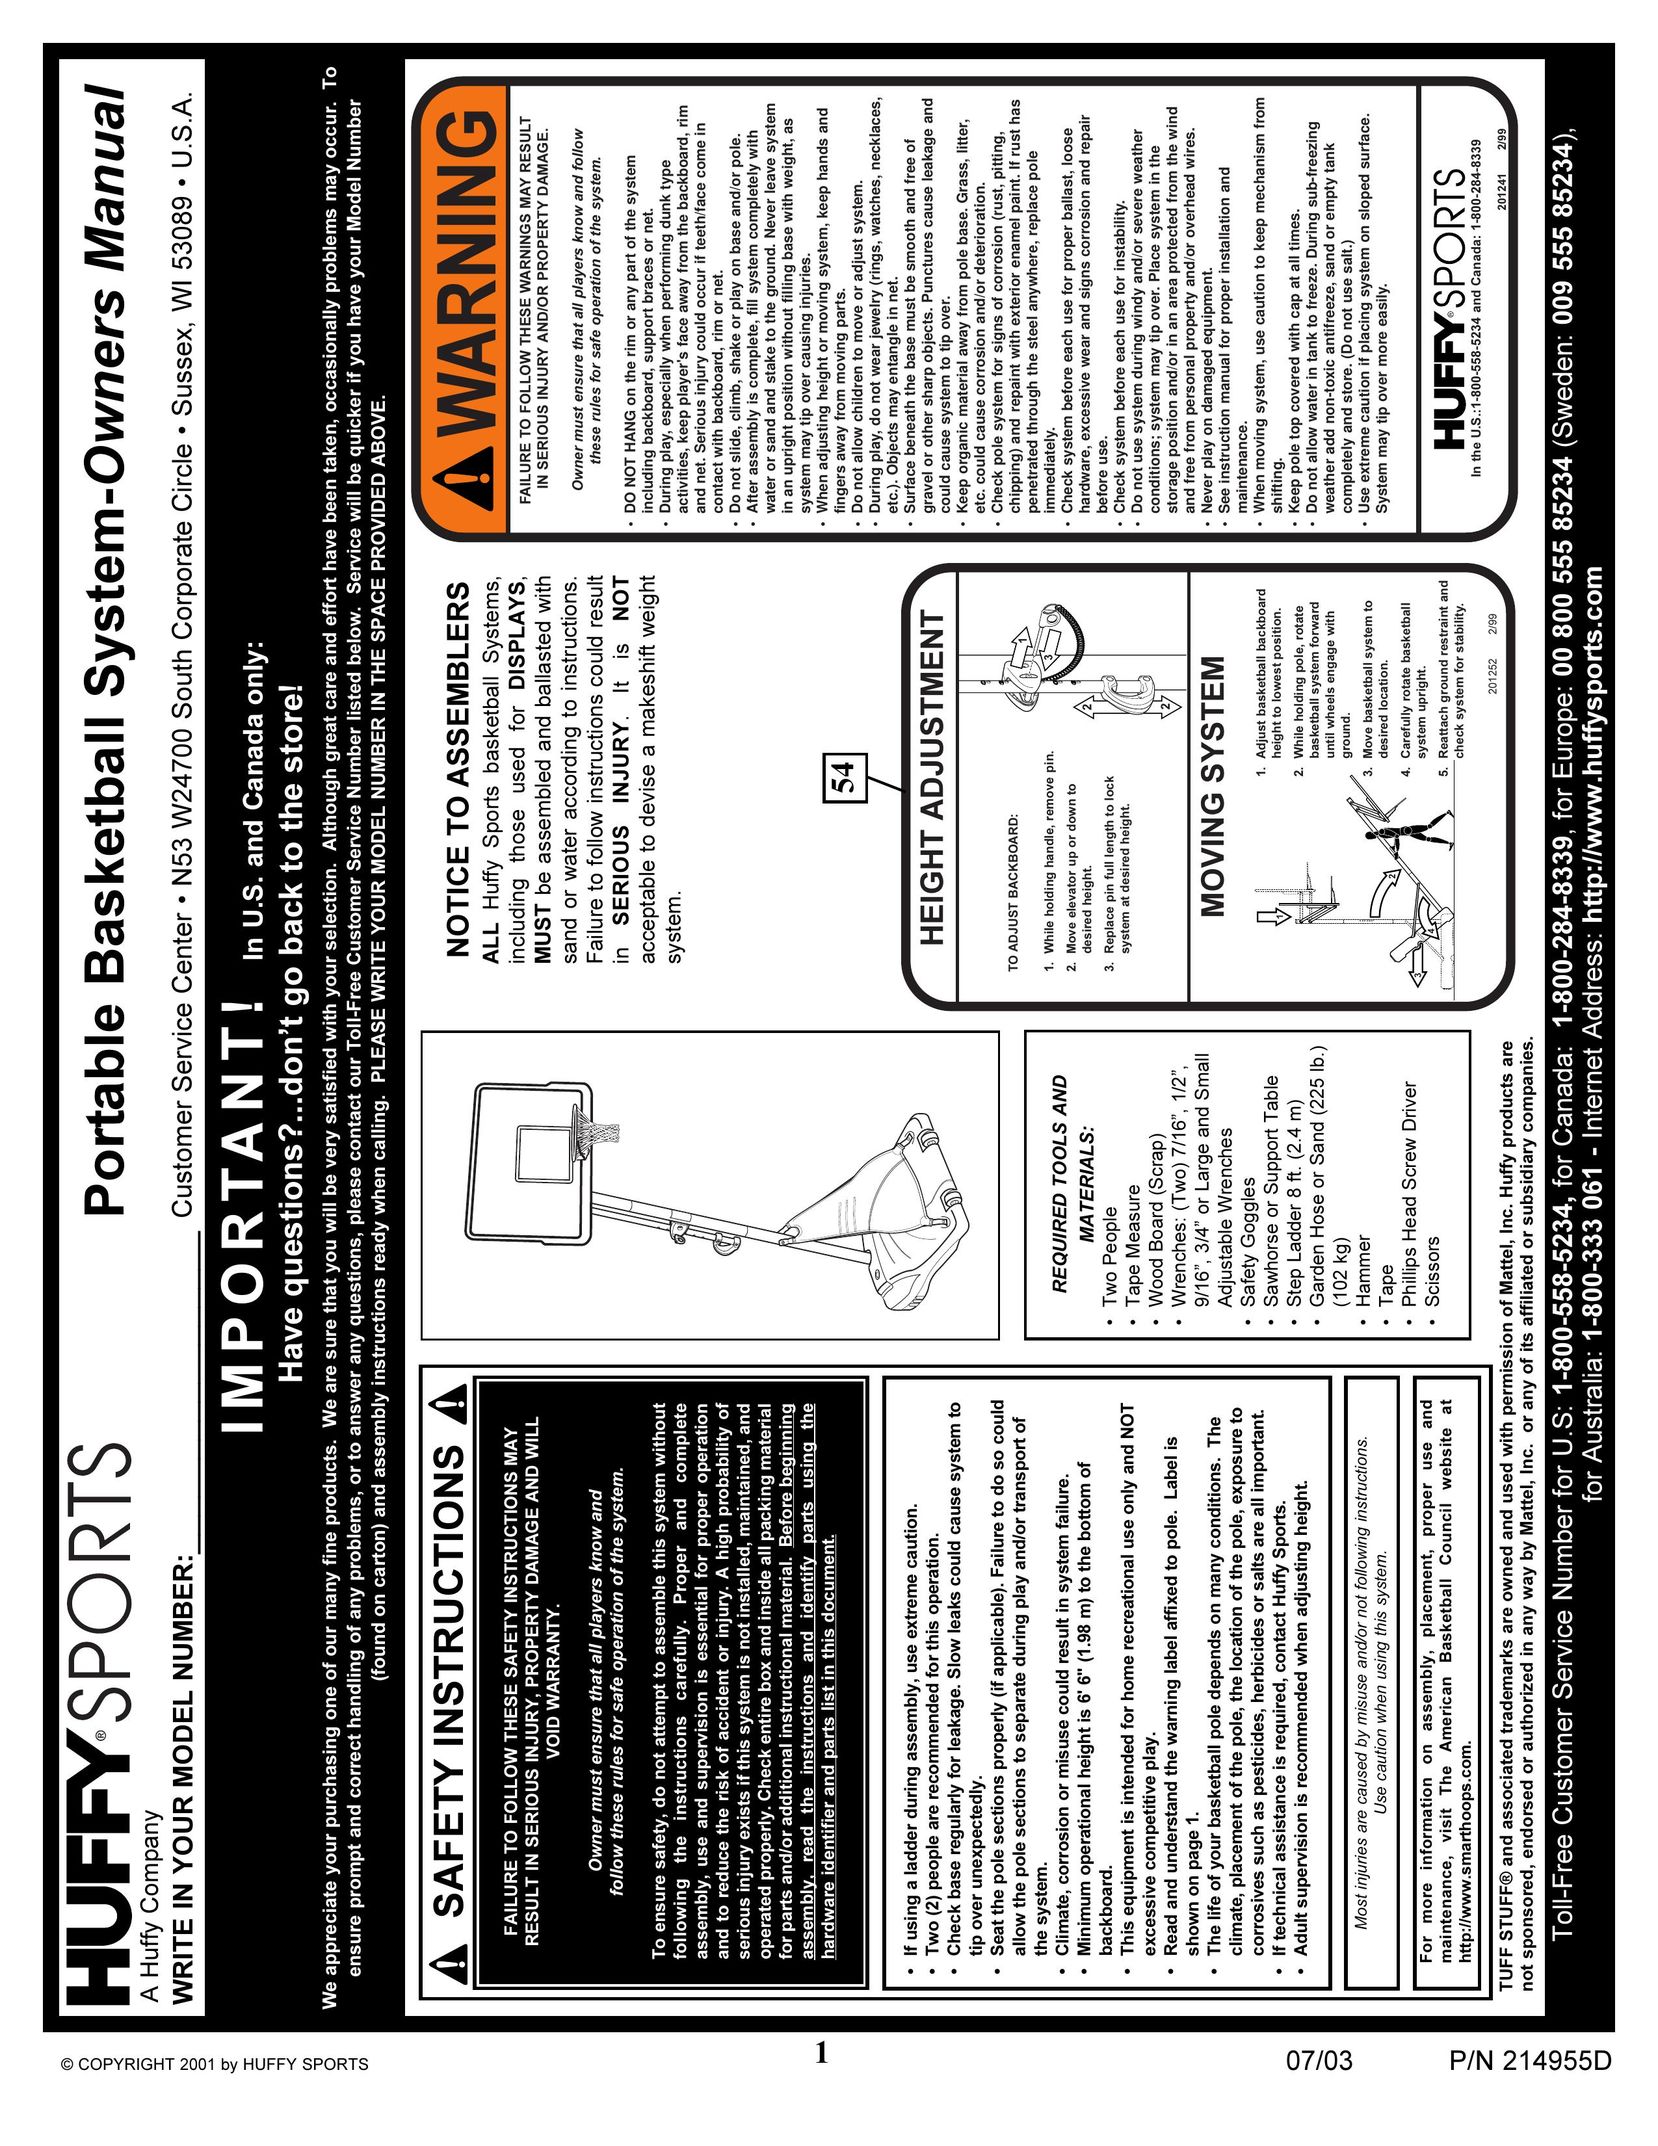 Huffy AR410W Fitness Equipment User Manual